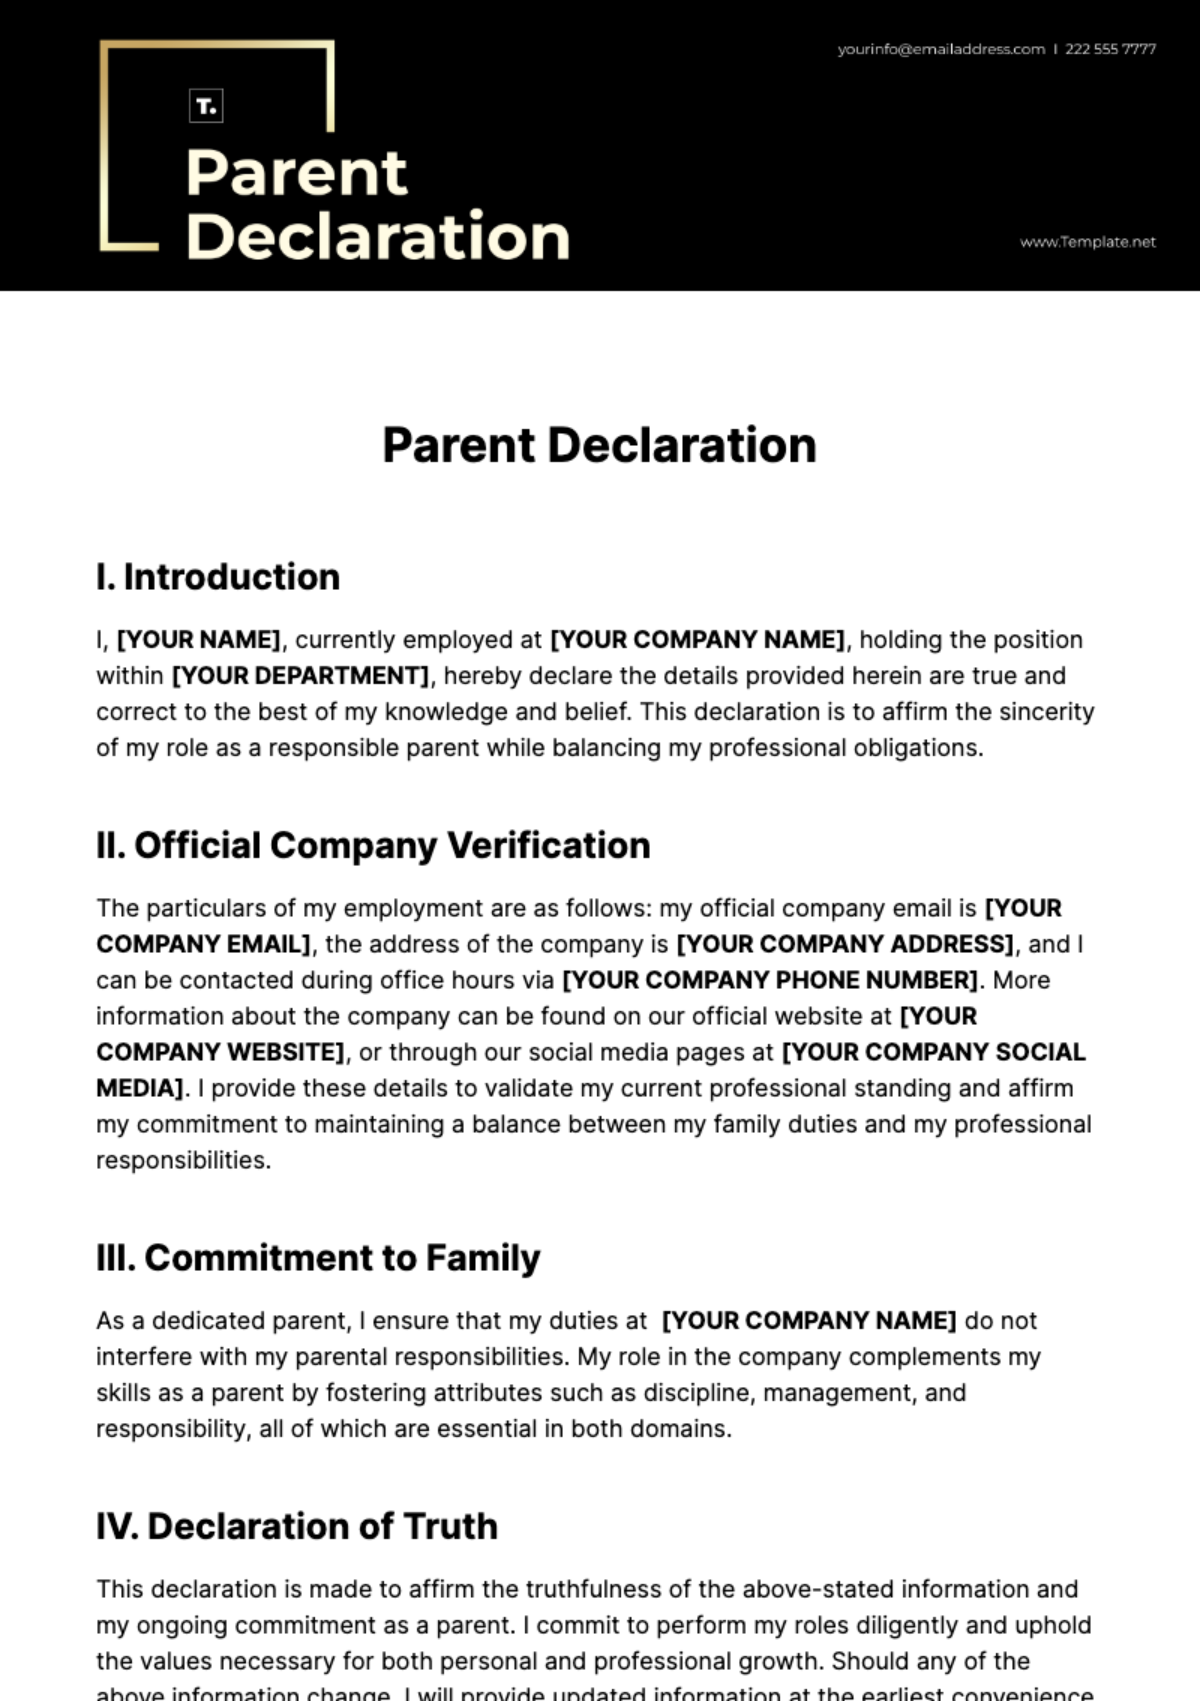 Parent Declaration Template